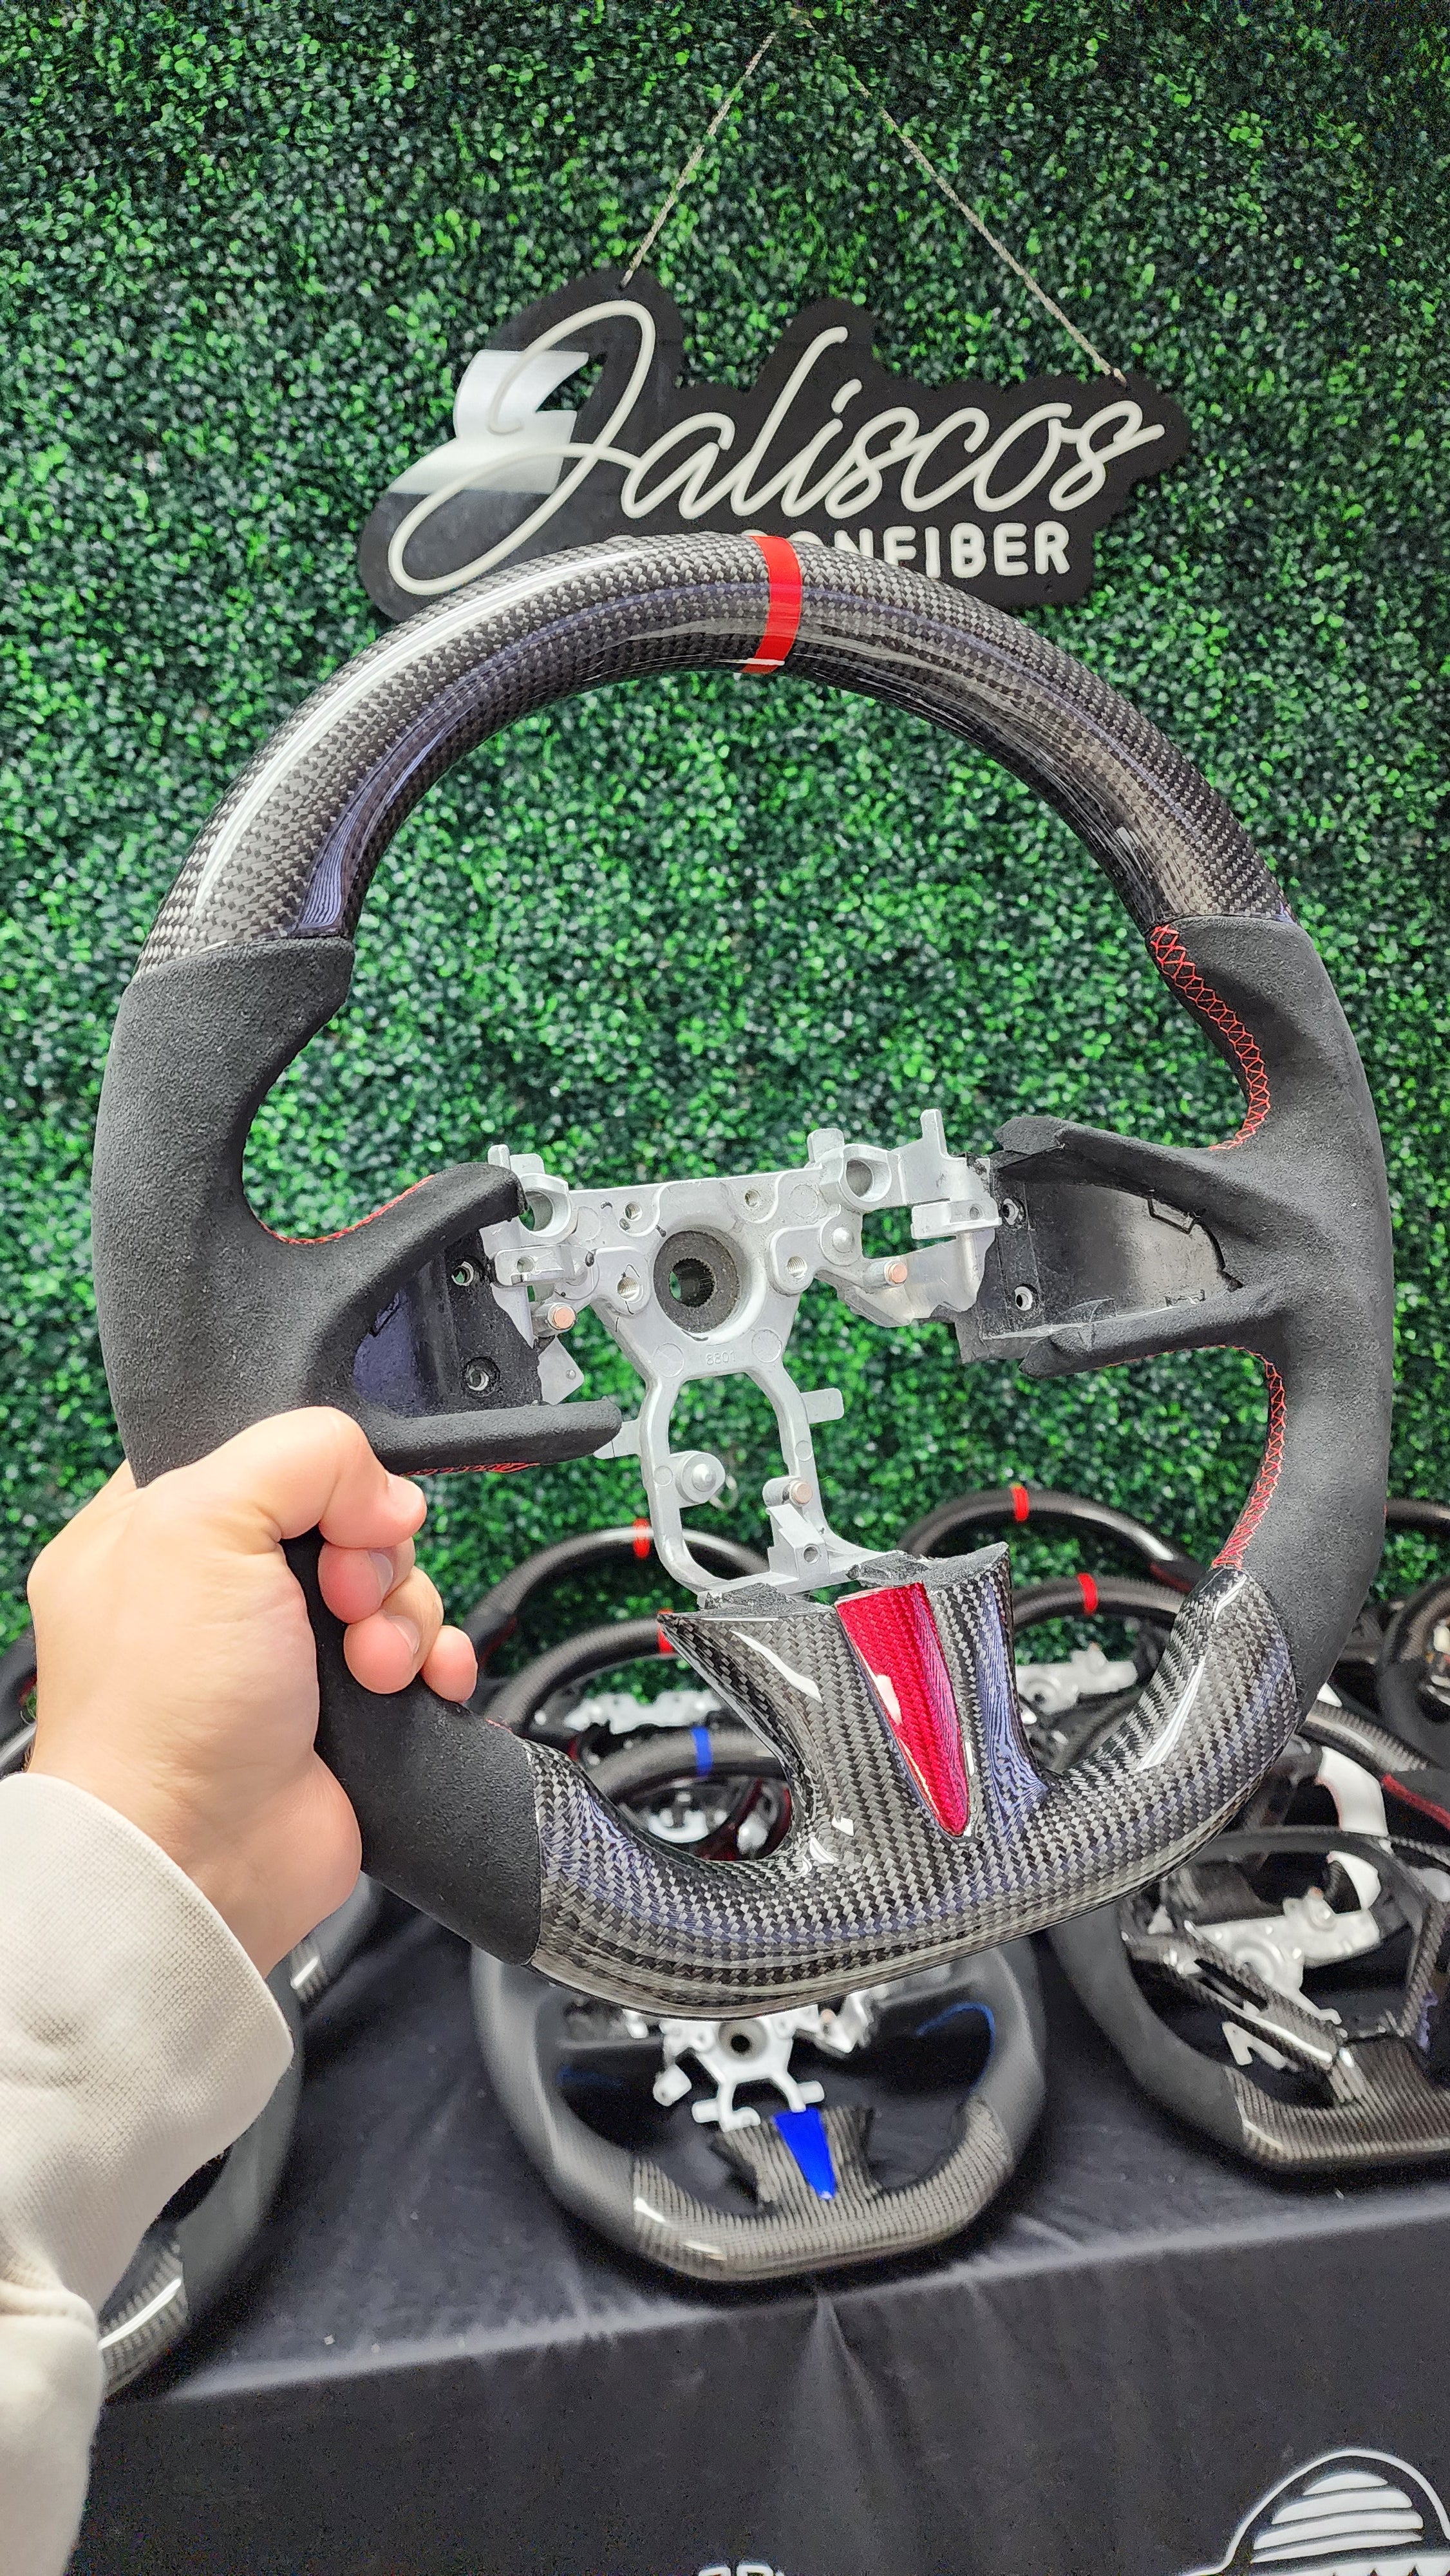 JCF Carbon Fiber Steering Wheels | Infiniti Q50 2014-17 DISCOUNTED